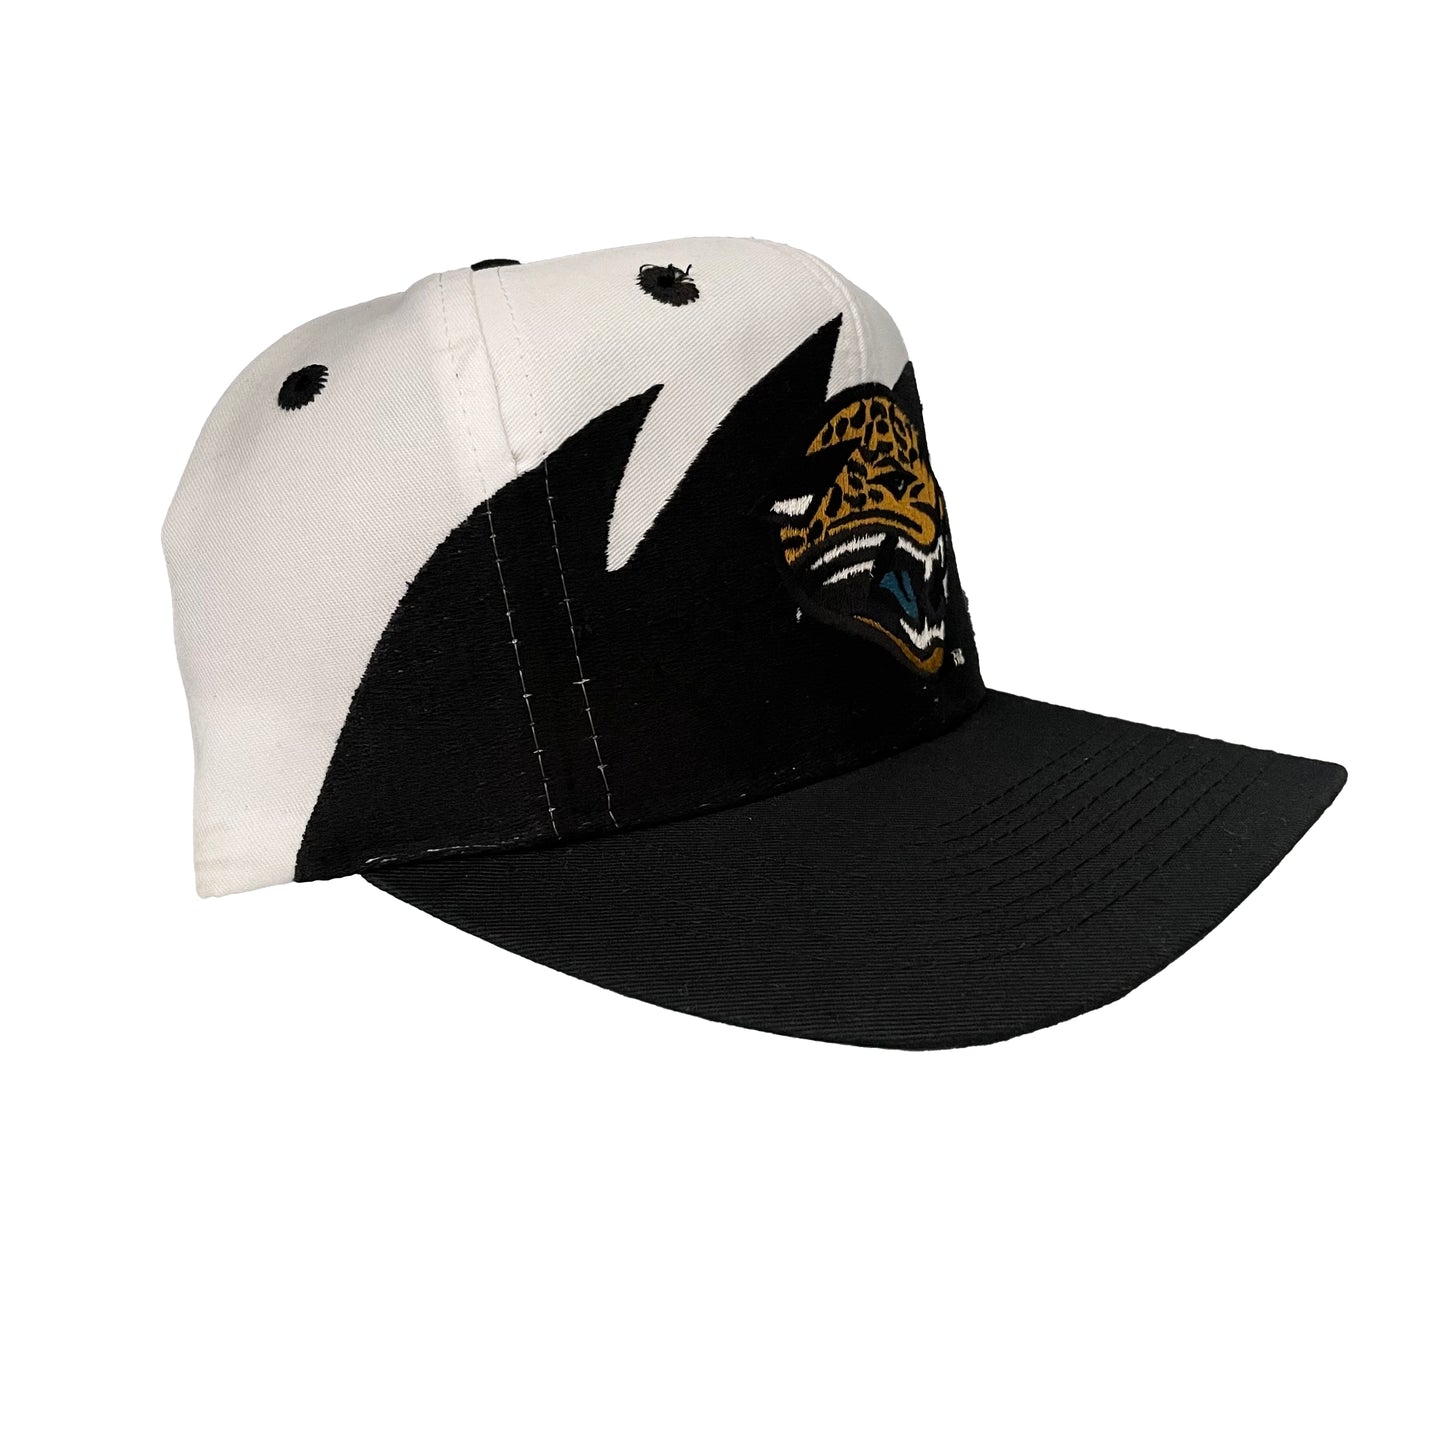 Jacksonville Jaguars LOGO 7 "Sharktooth" hat (RARE)